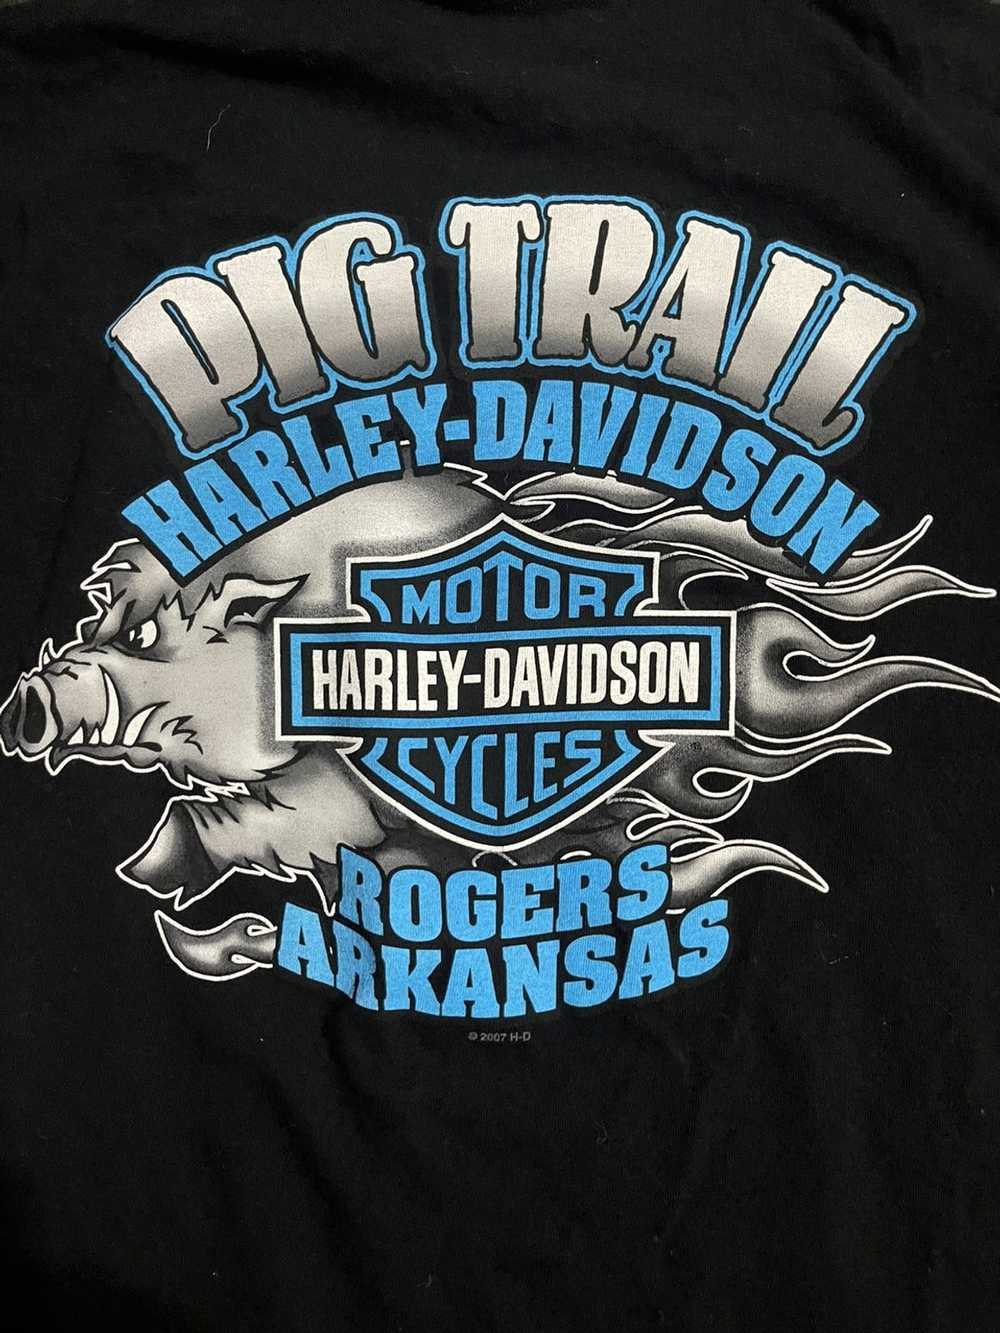 Harley Davidson Harley Davidson made in USA - image 2